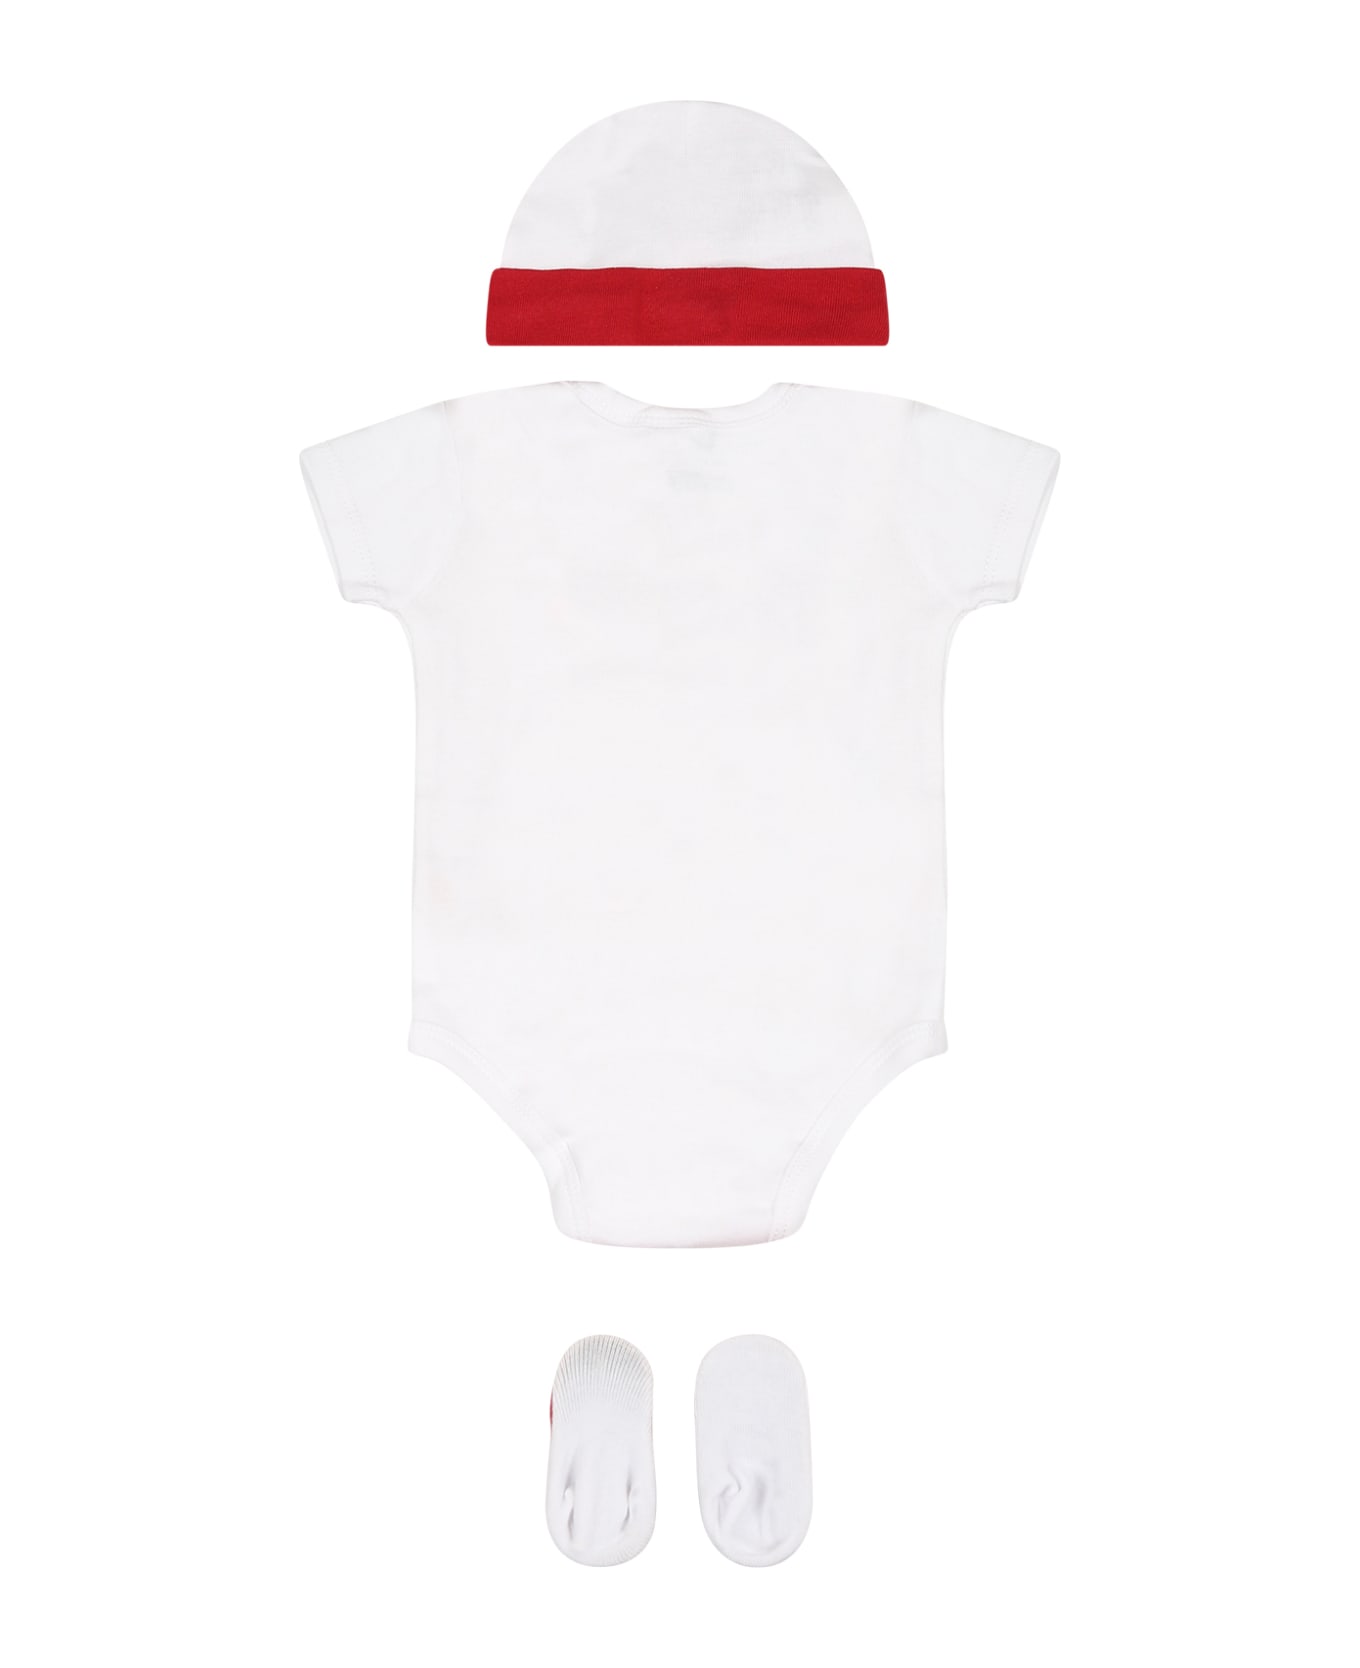 Levi's White Set For Baby Kids With Logo - White